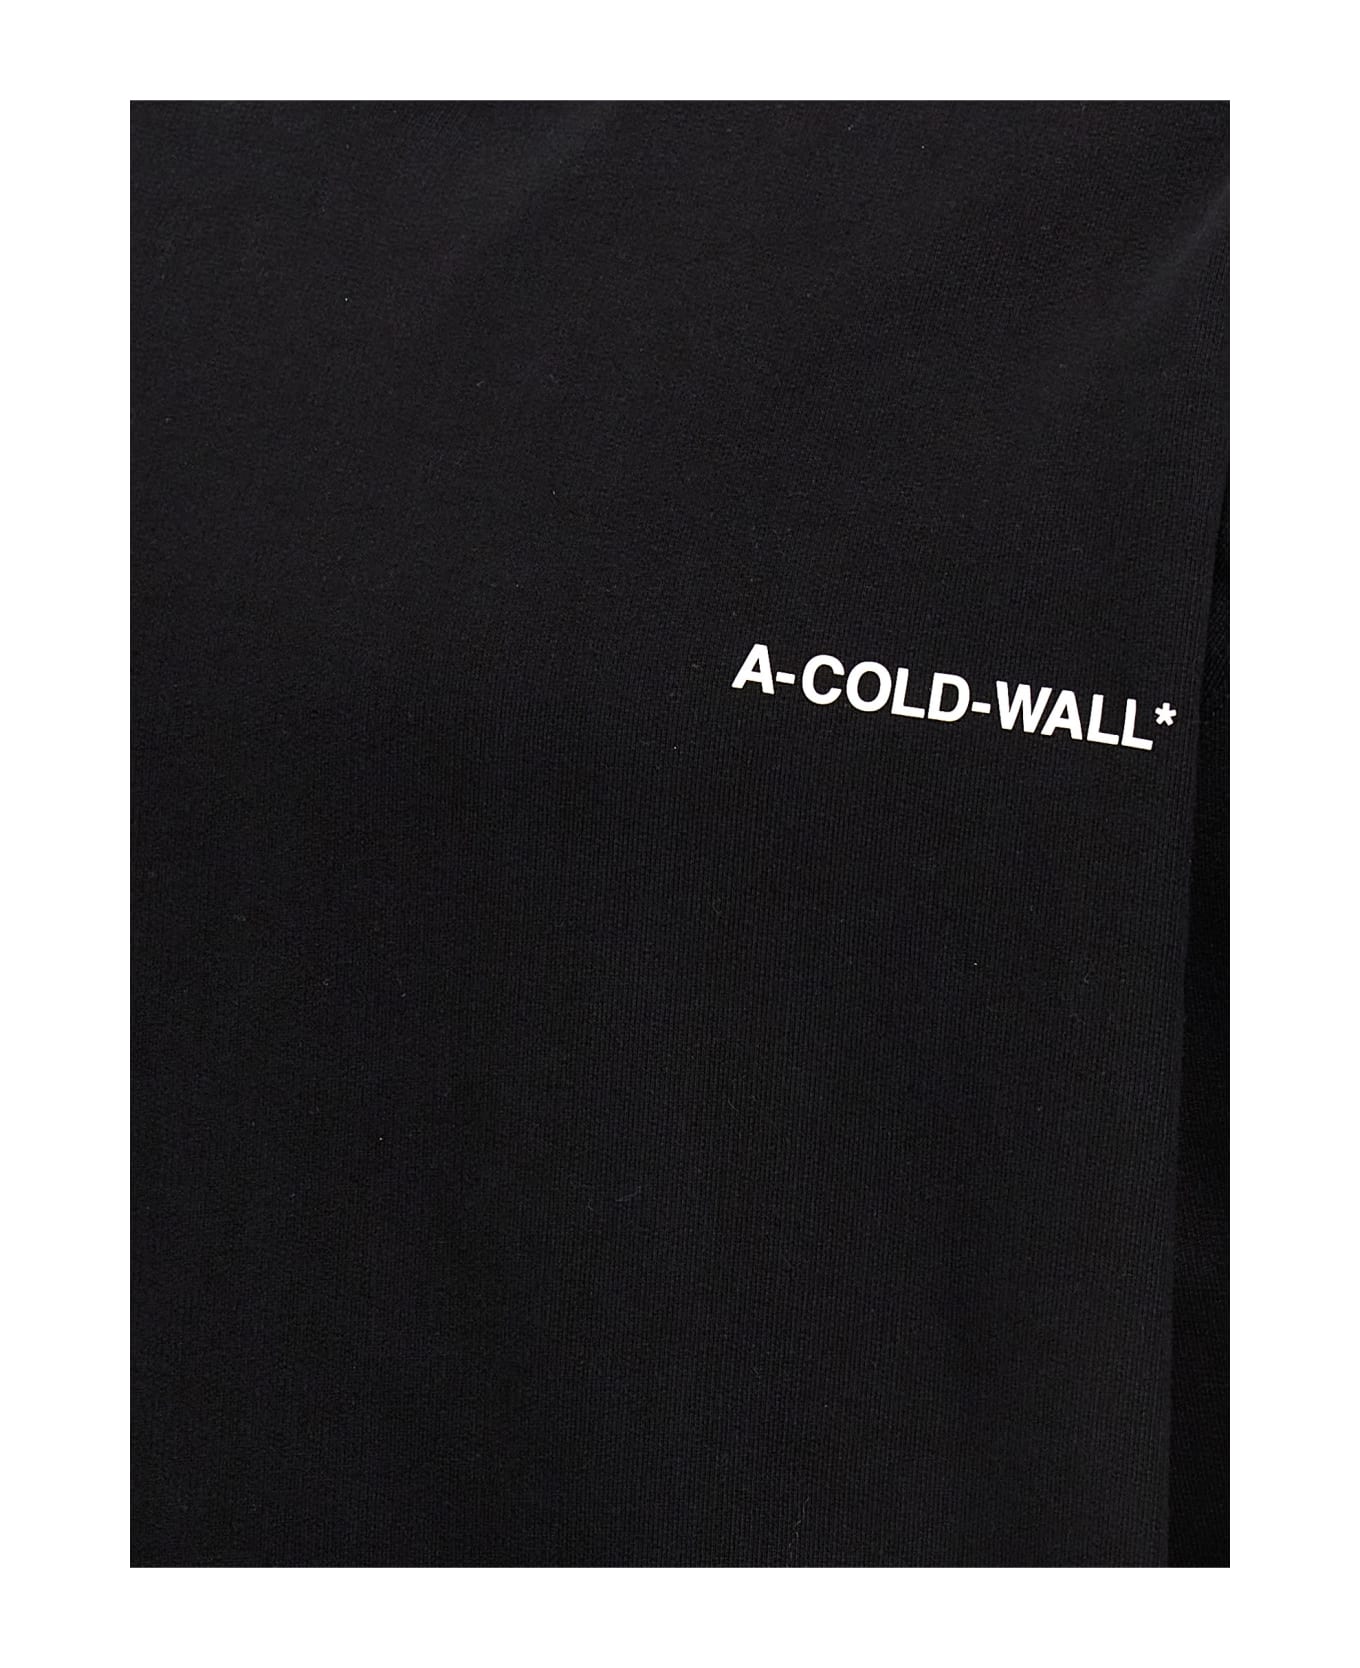 A-COLD-WALL 'essential Small Logo' Hoodie Fleece - BLACK フリース